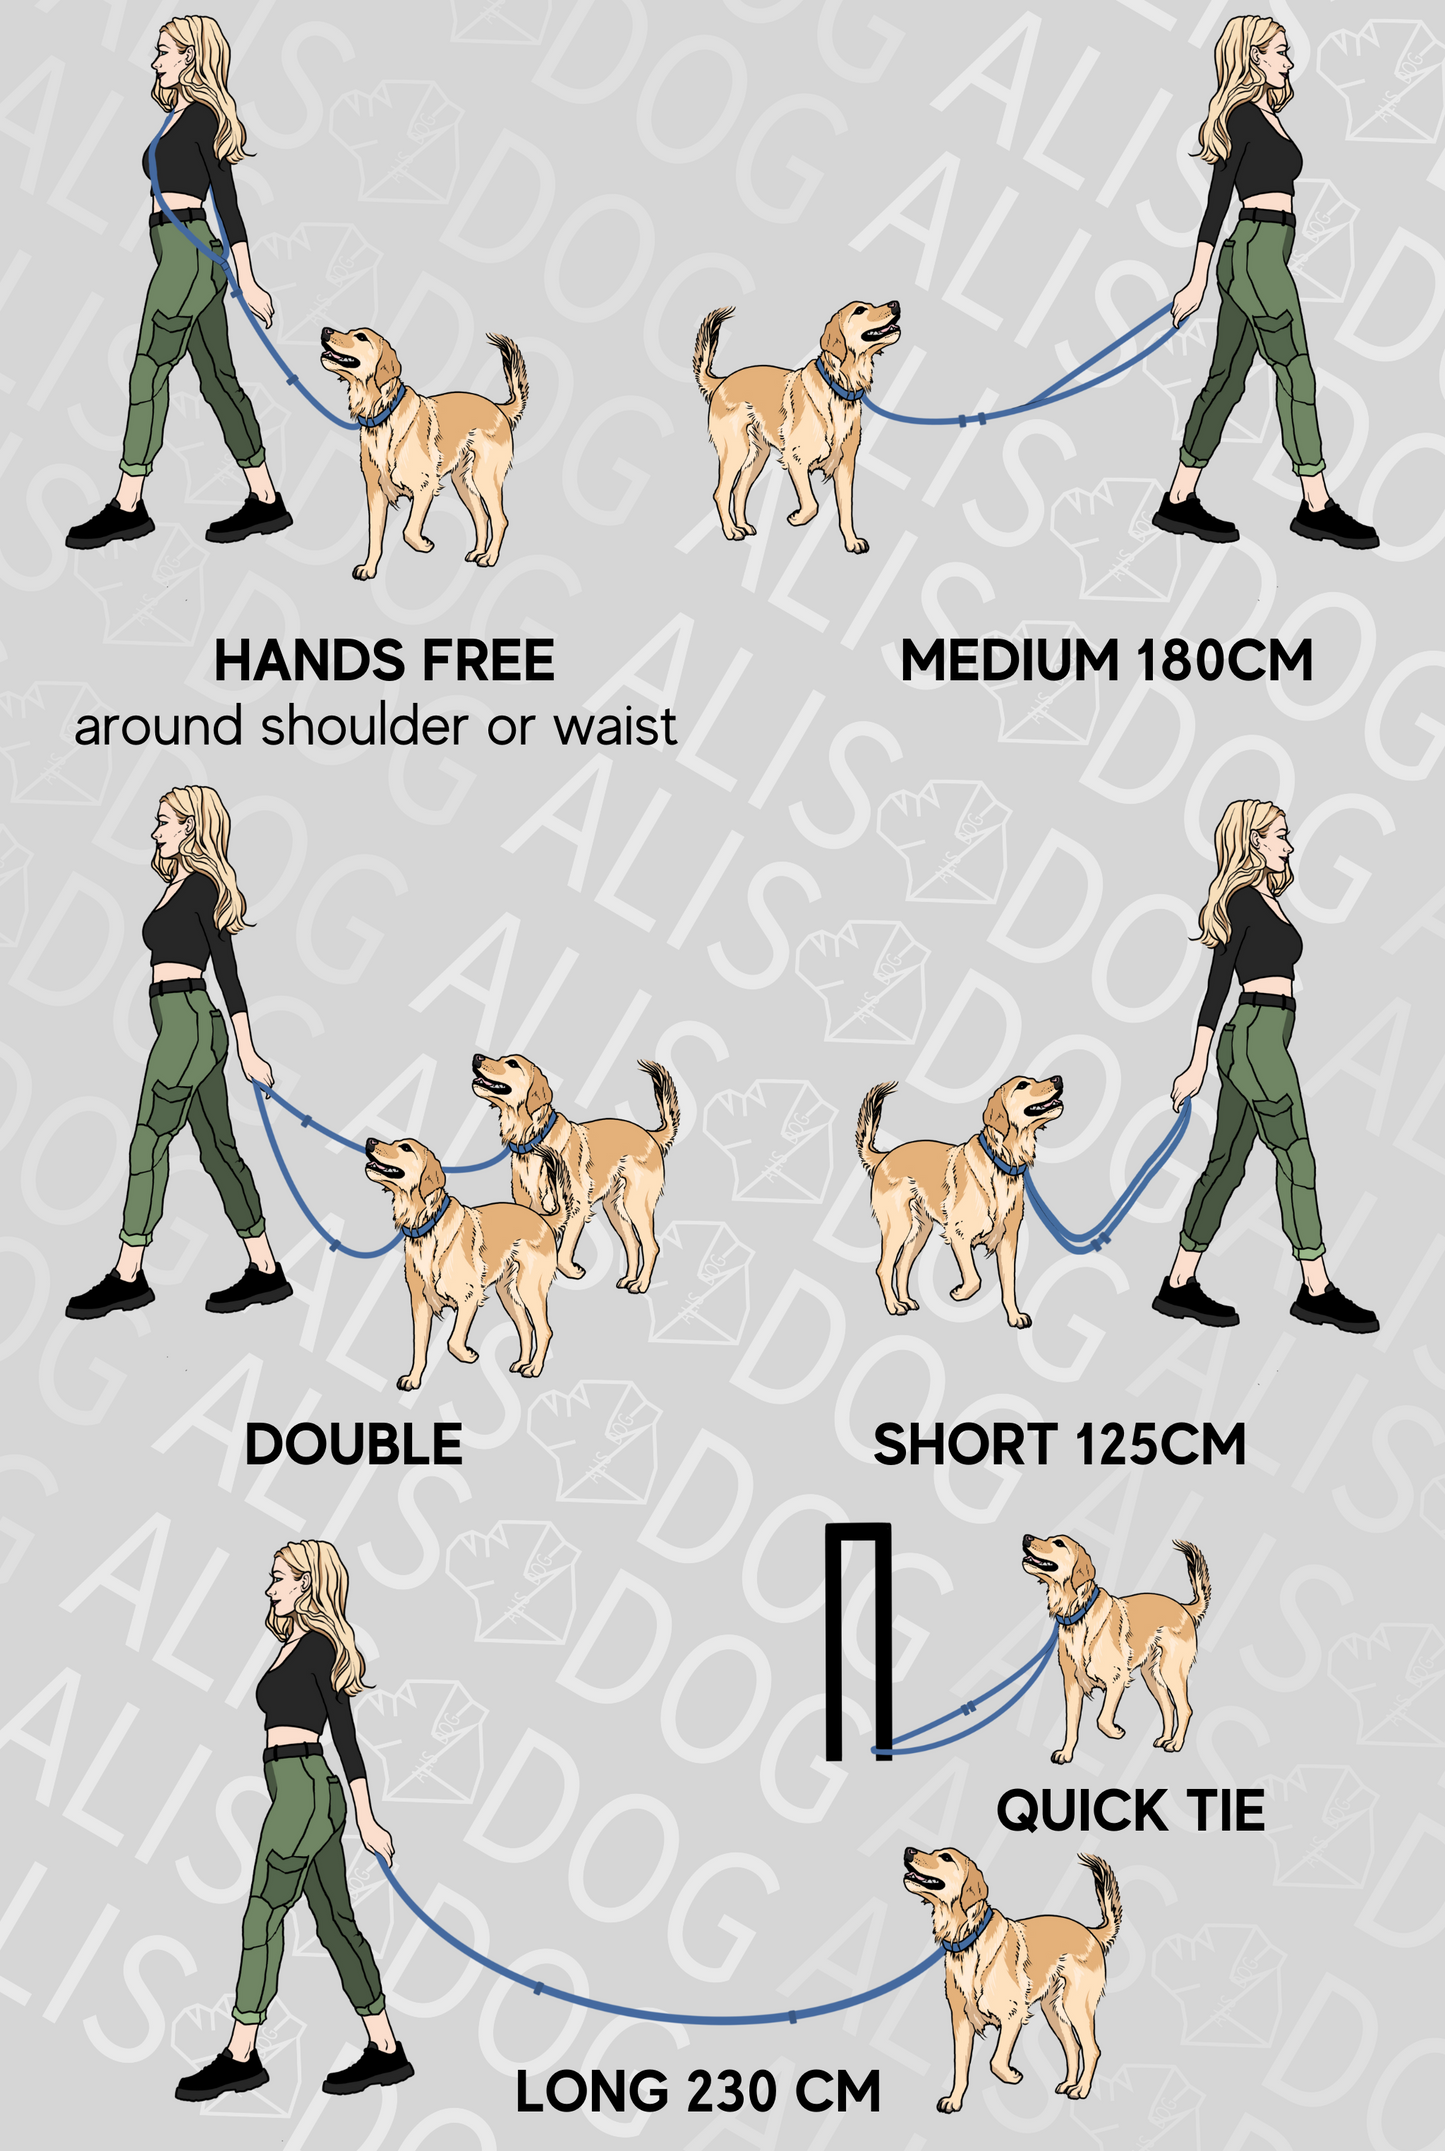 Lilac Waterproof Multi dog leash